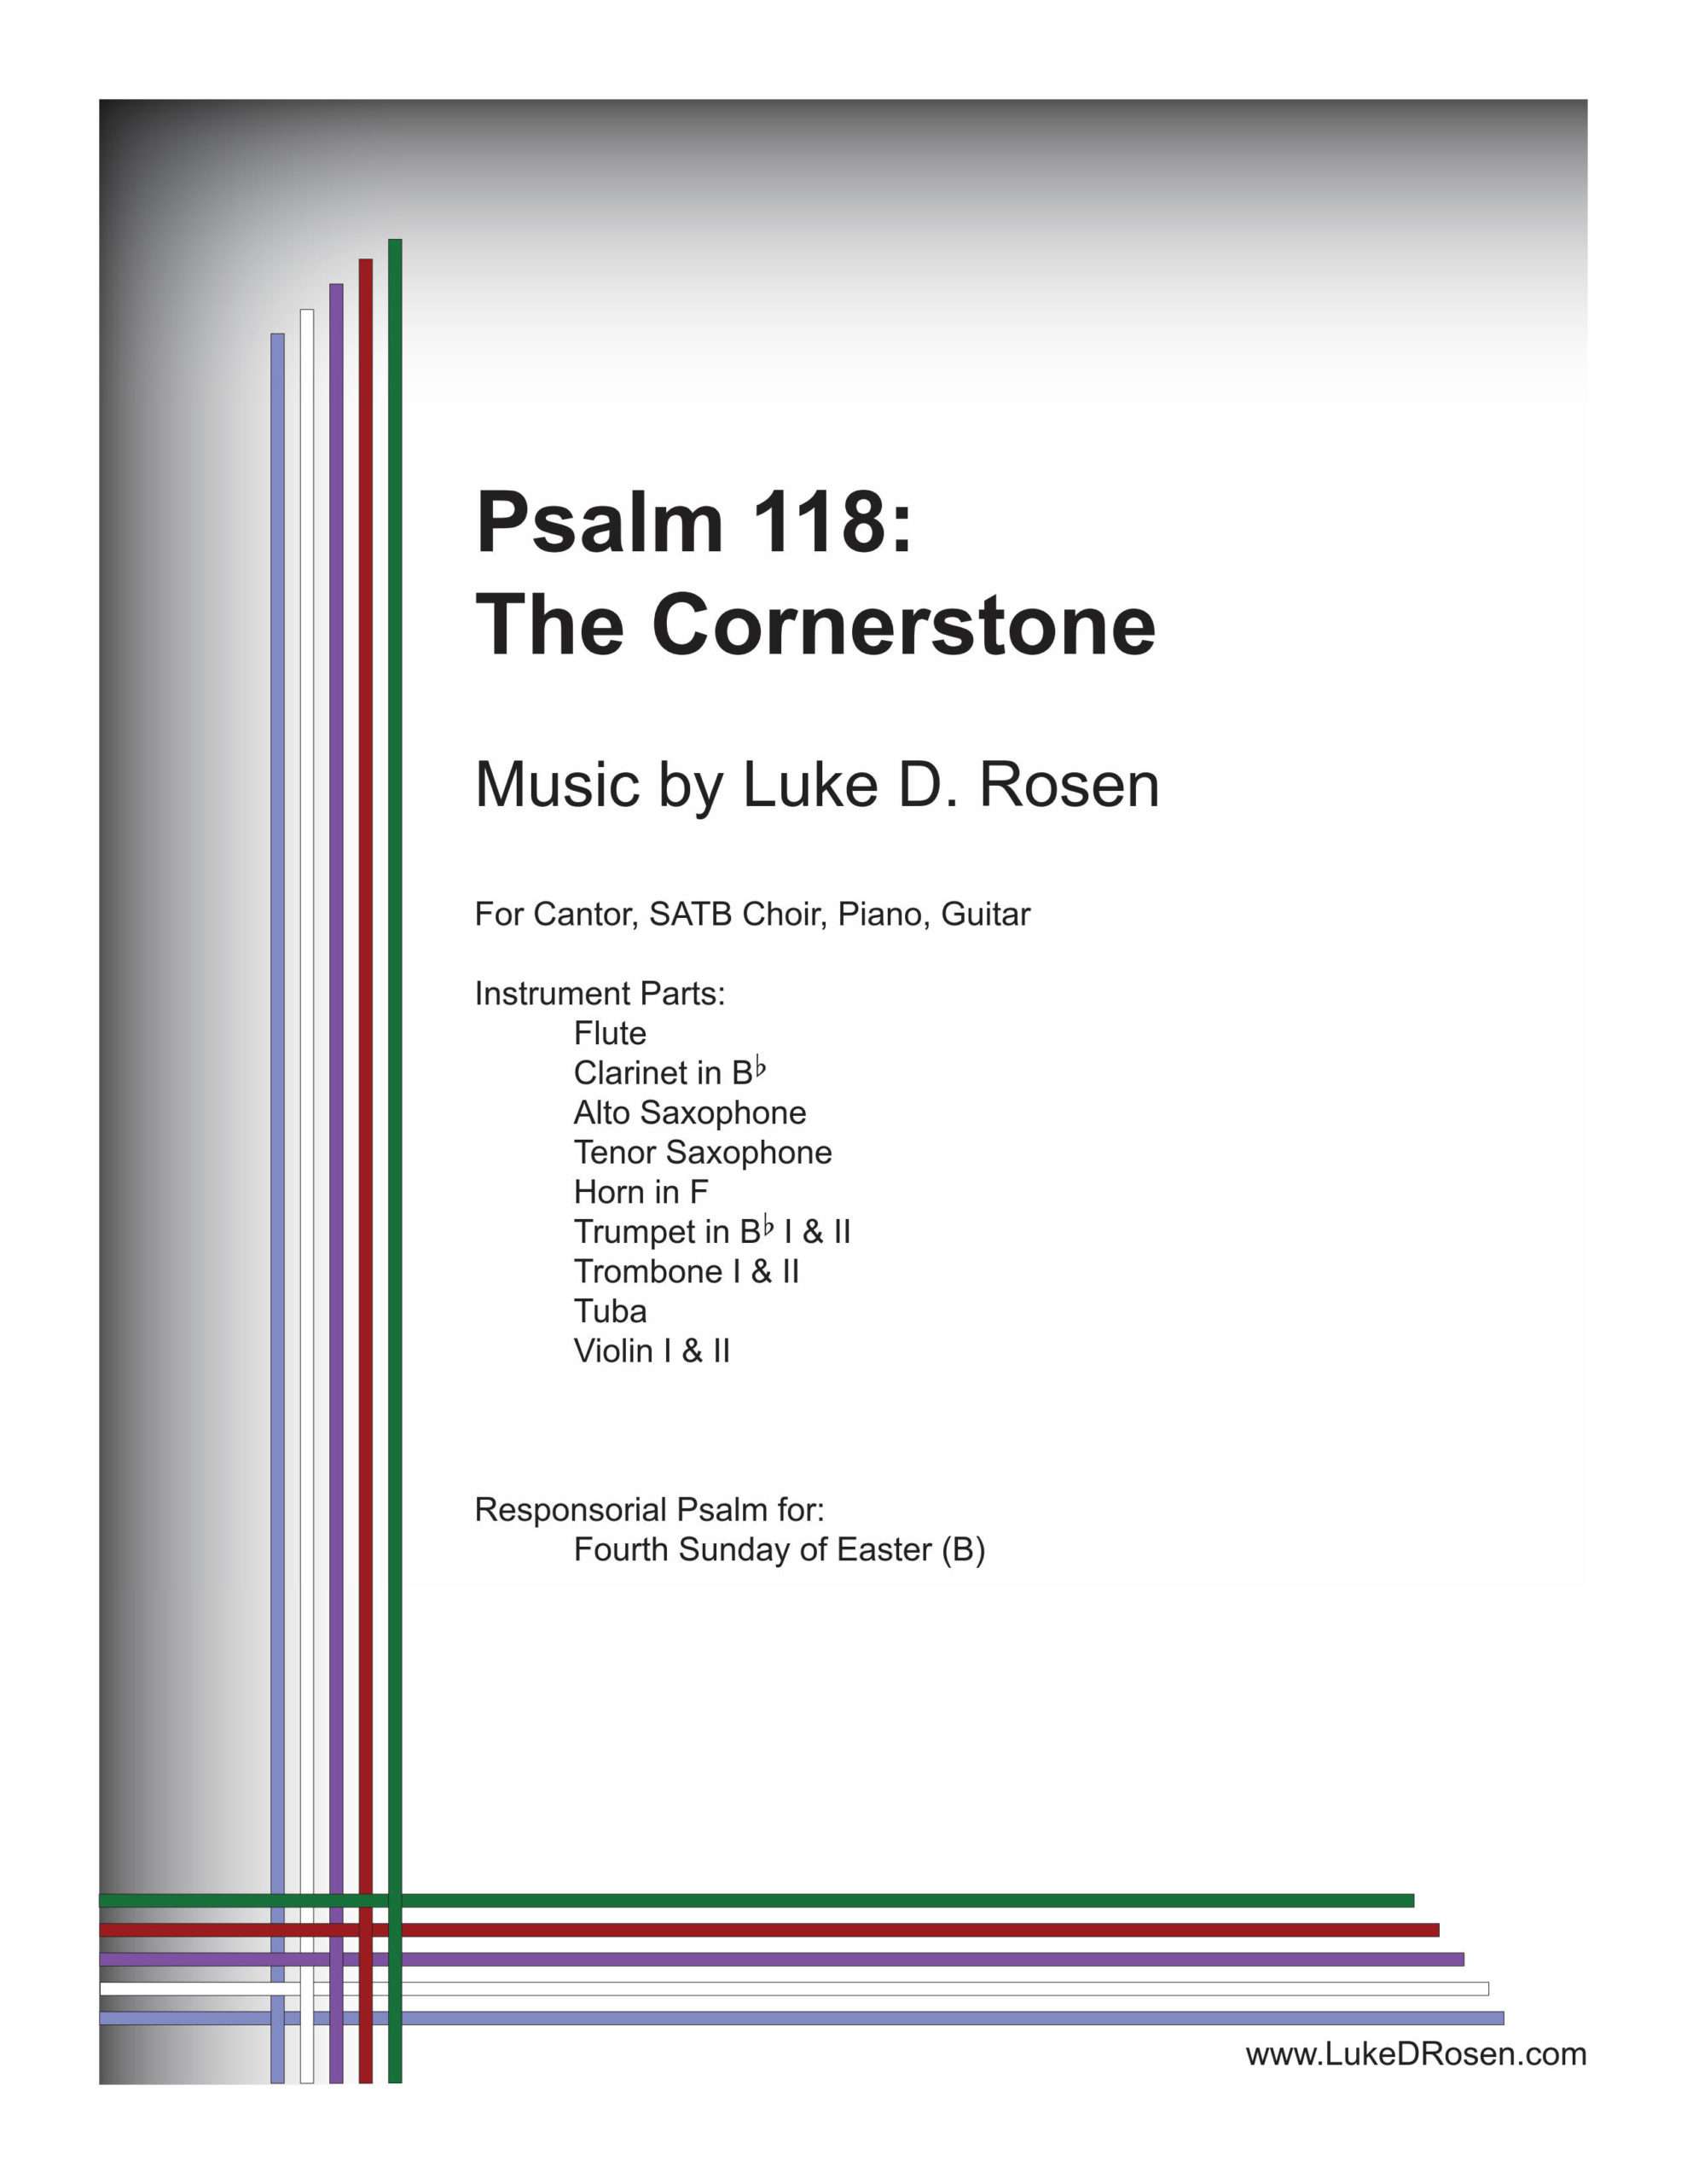 Psalm 118 – The Cornerstone (Rosen)